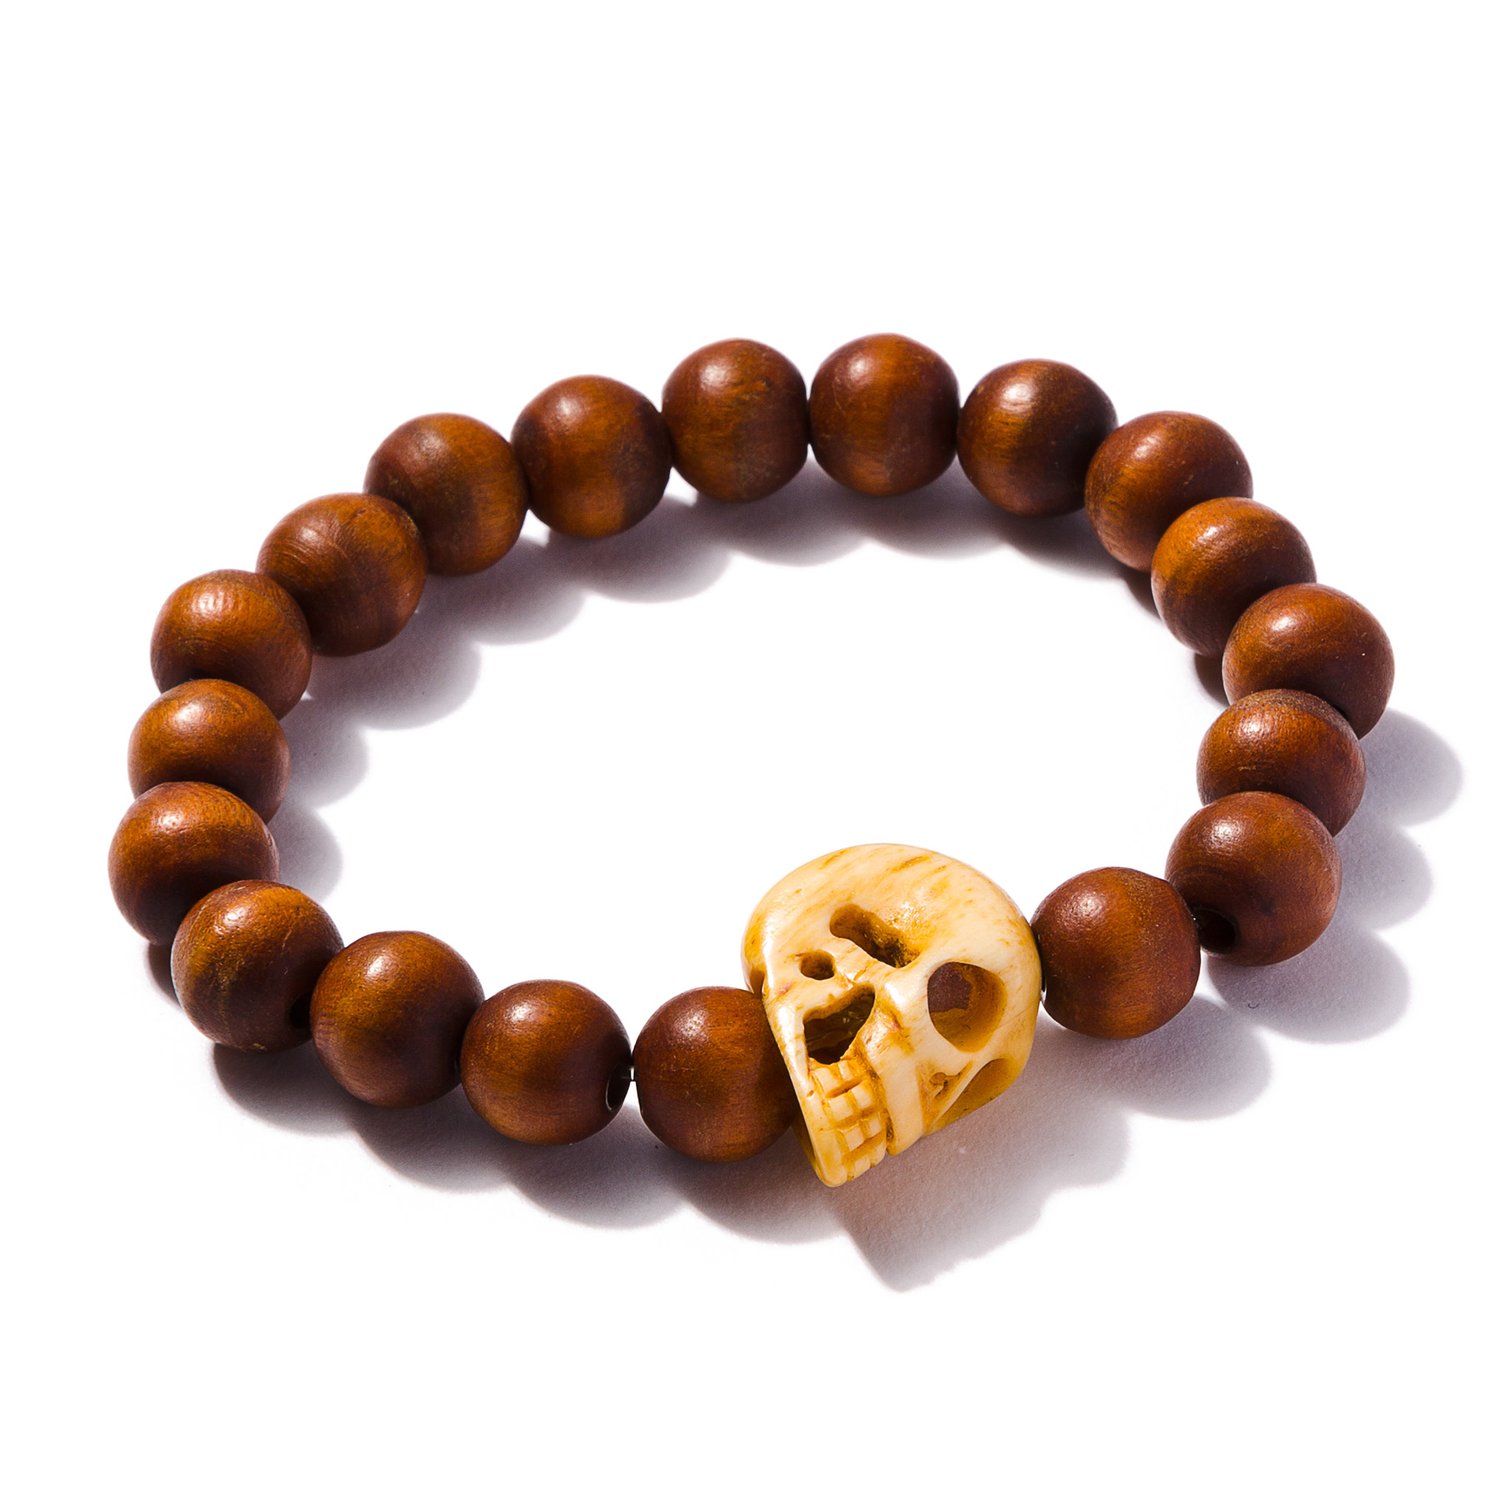 Image of XL Bone Skull with Wooden Beads Bracelet